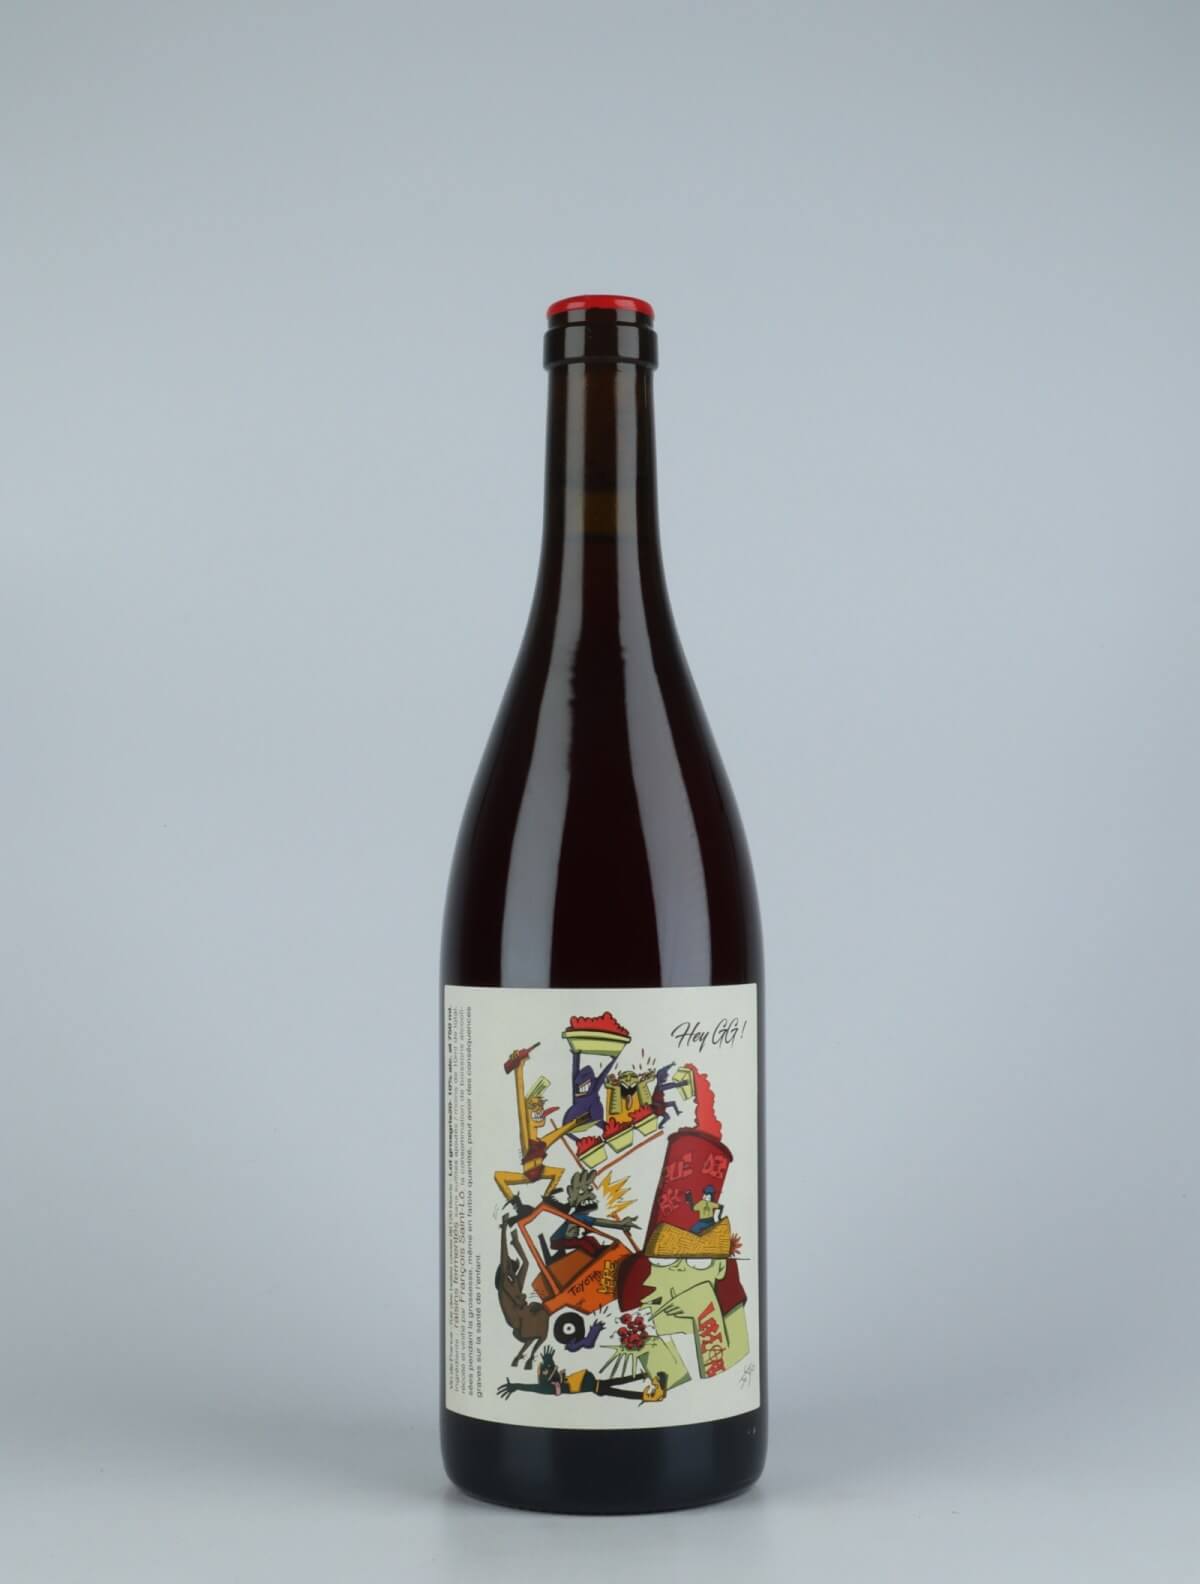 A bottle 2020 Hey GG!!! Red wine from François Saint-Lô, Loire in France